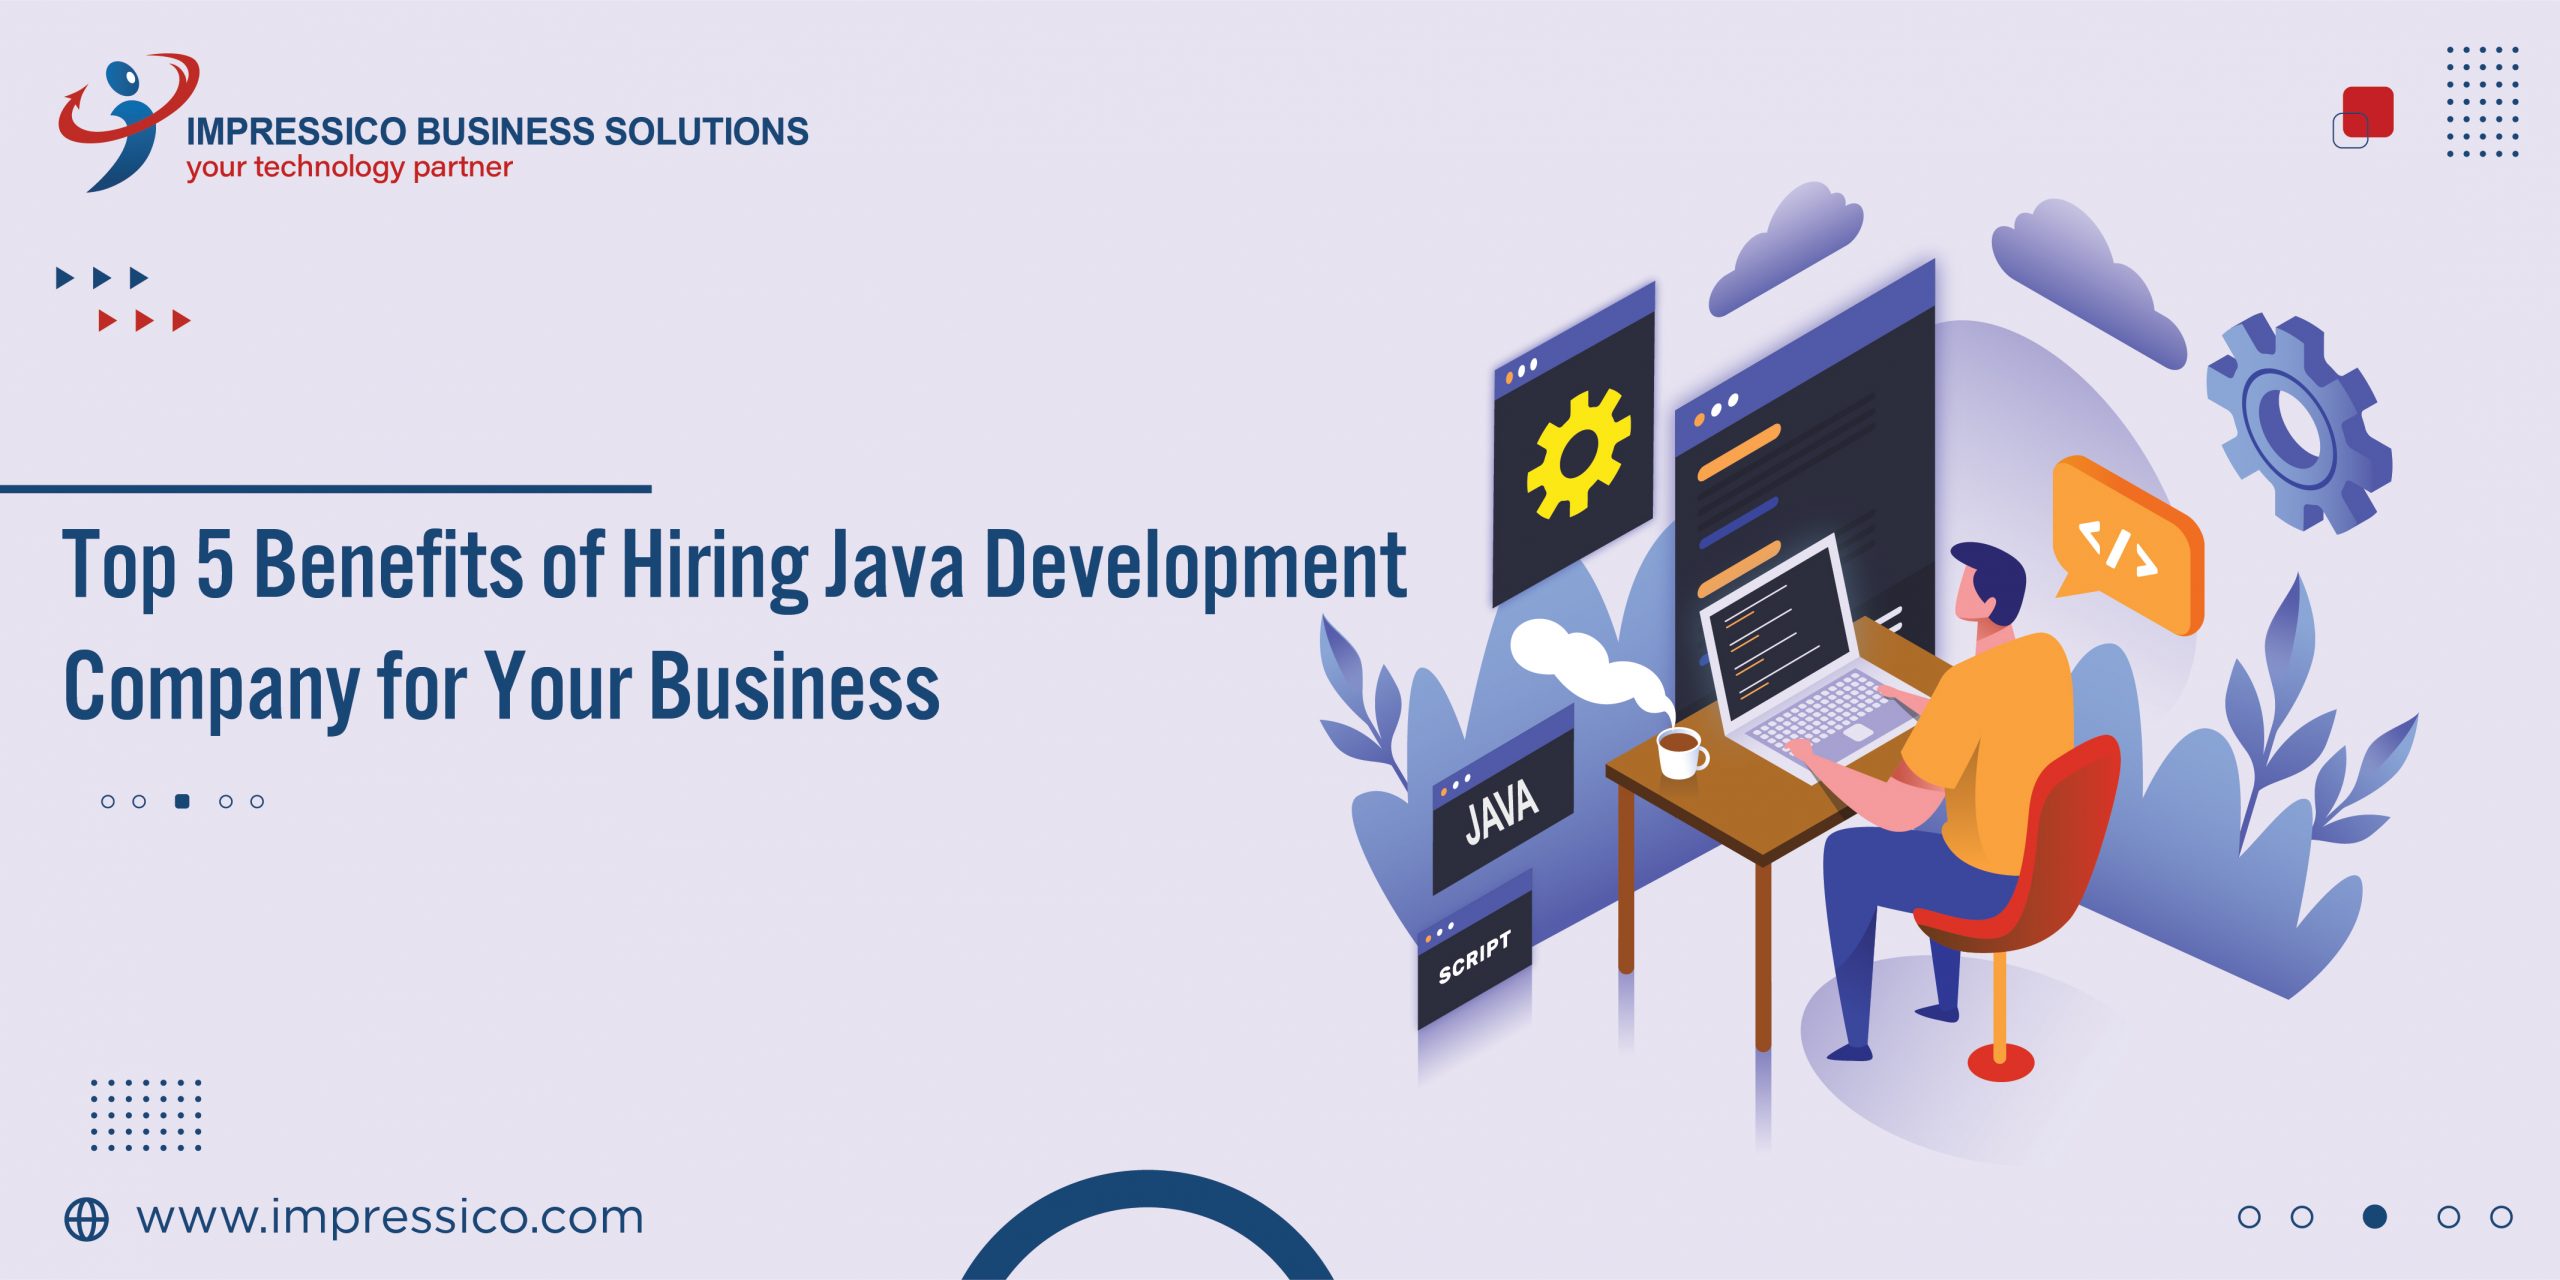 Java application development